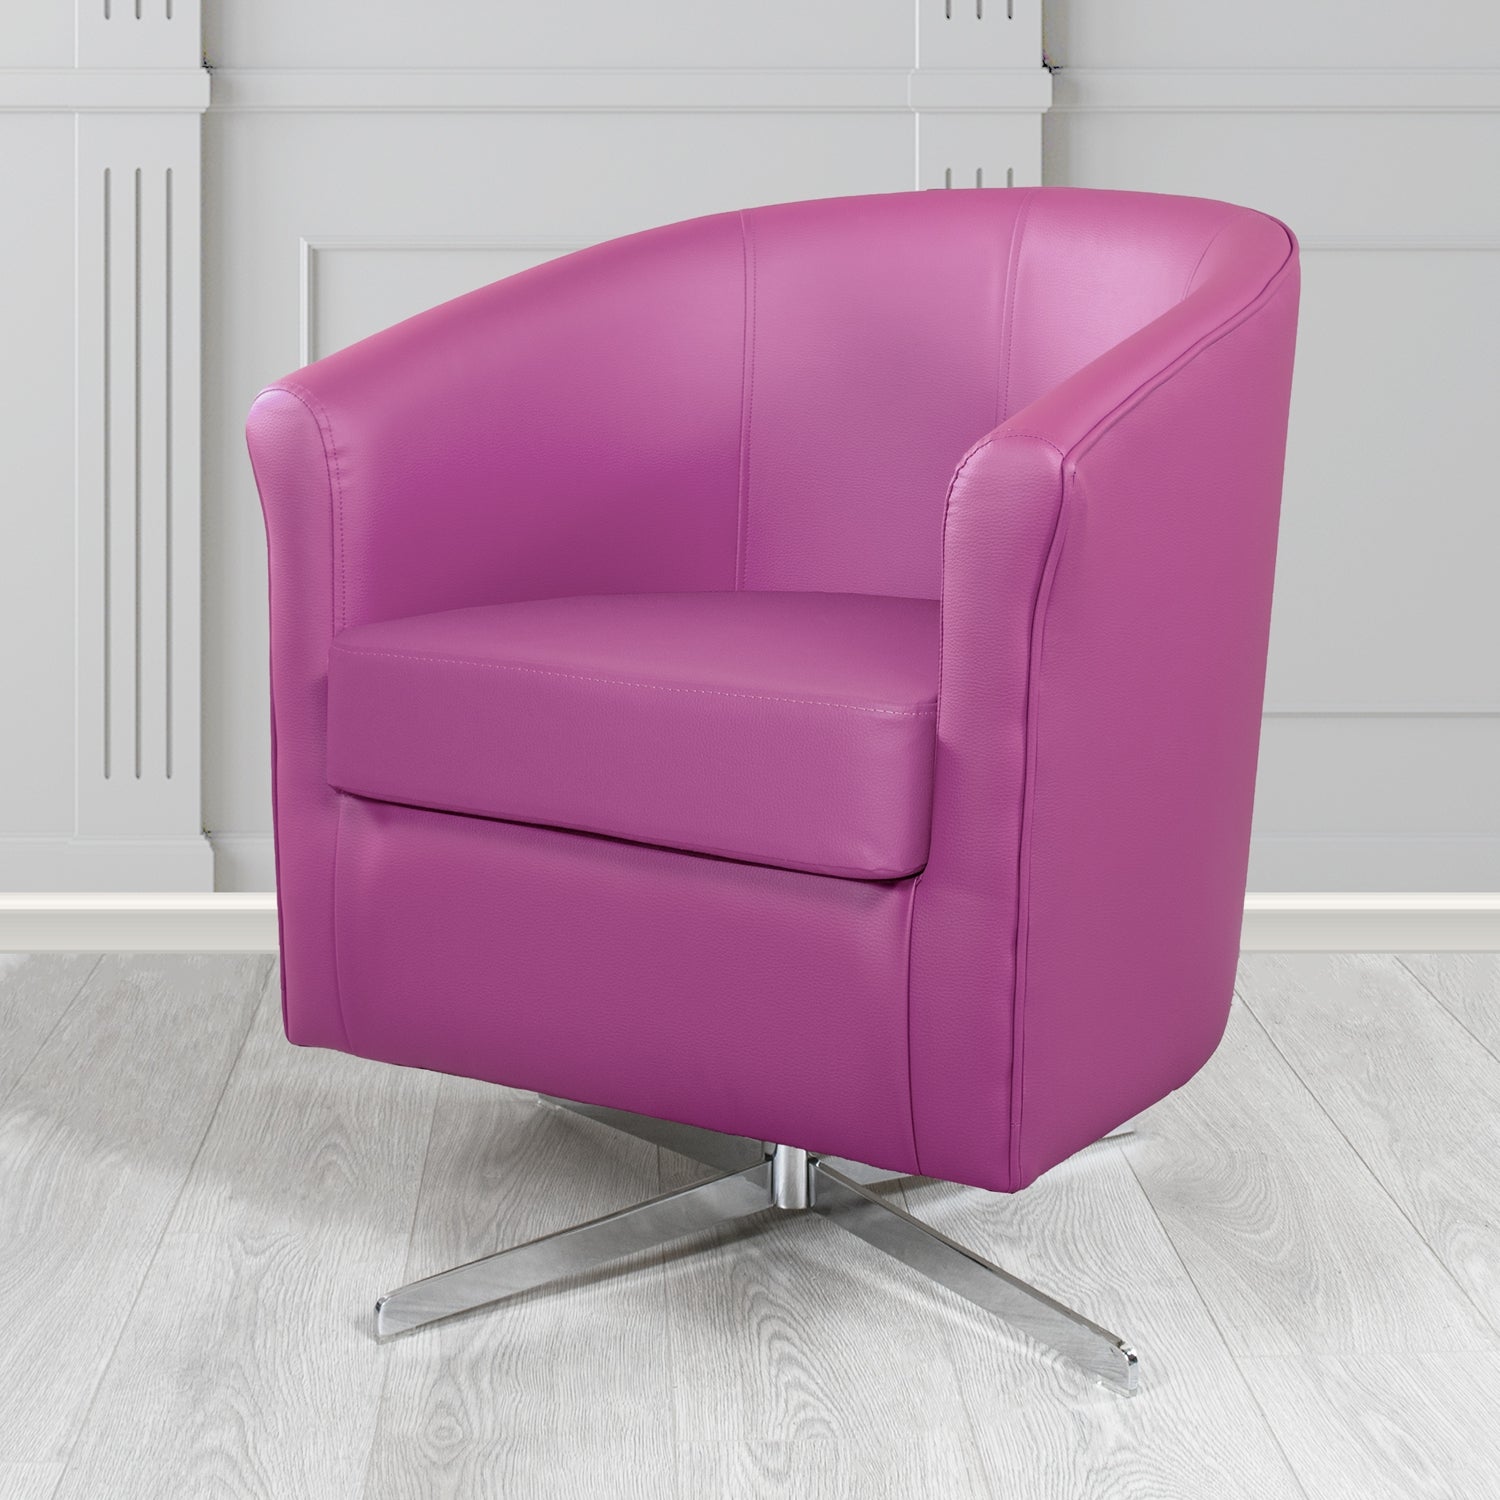 Cannes Swivel Tub Chair in Just Colour Fuchsia Crib 5 Faux Leather